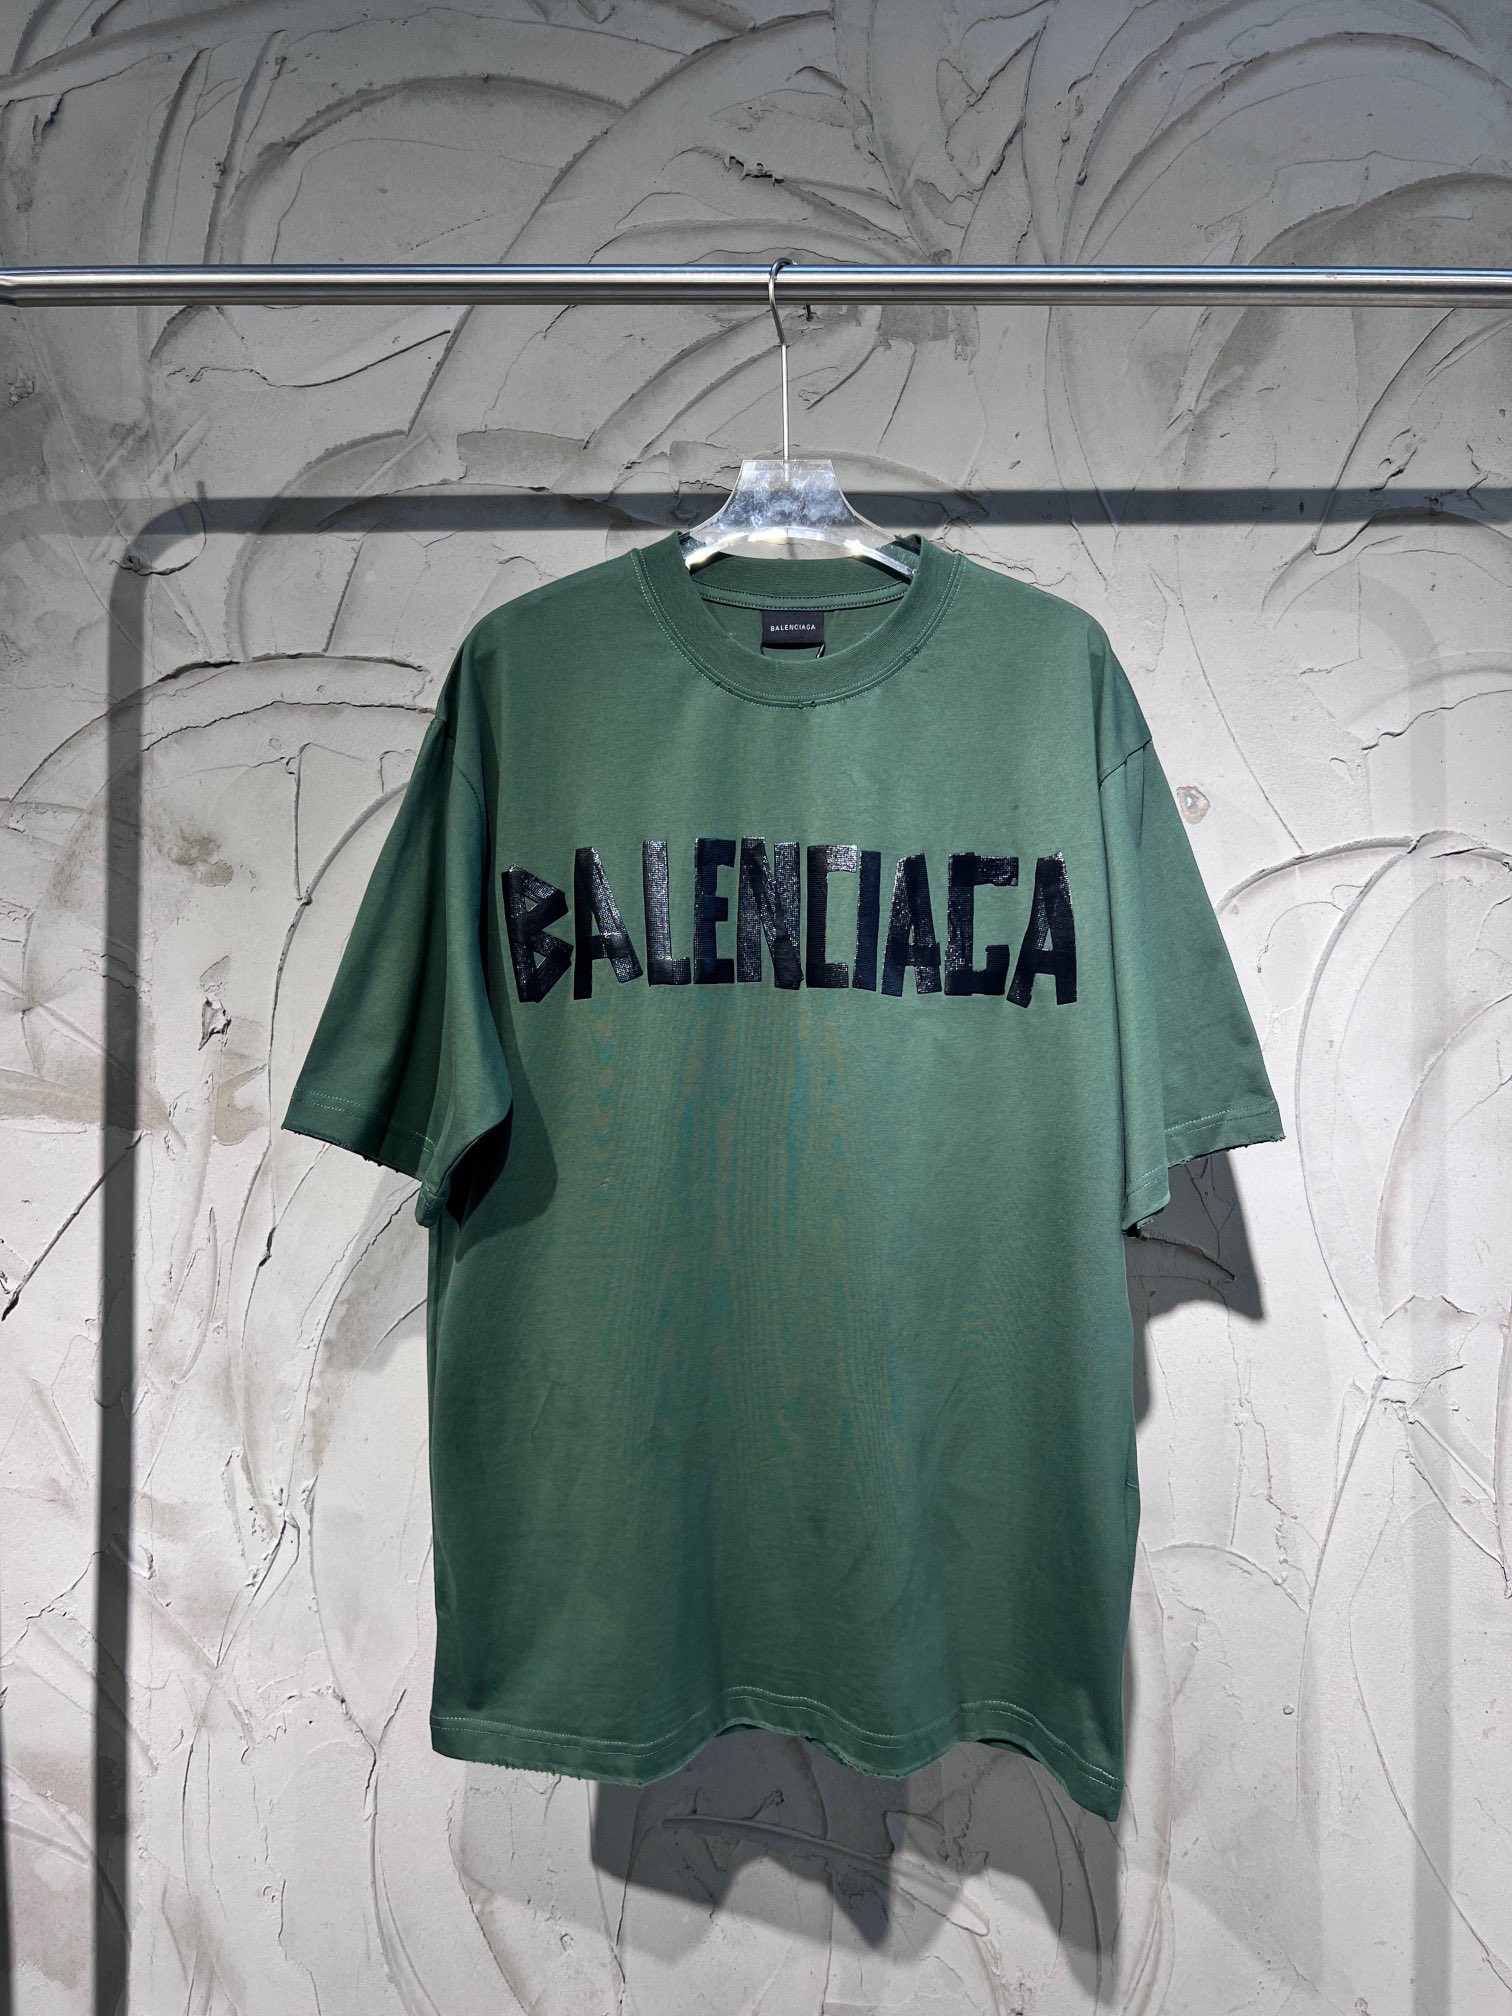 Balenciaga Clothing T-Shirt Army Green Black Unisex Cotton Spring Collection Short Sleeve